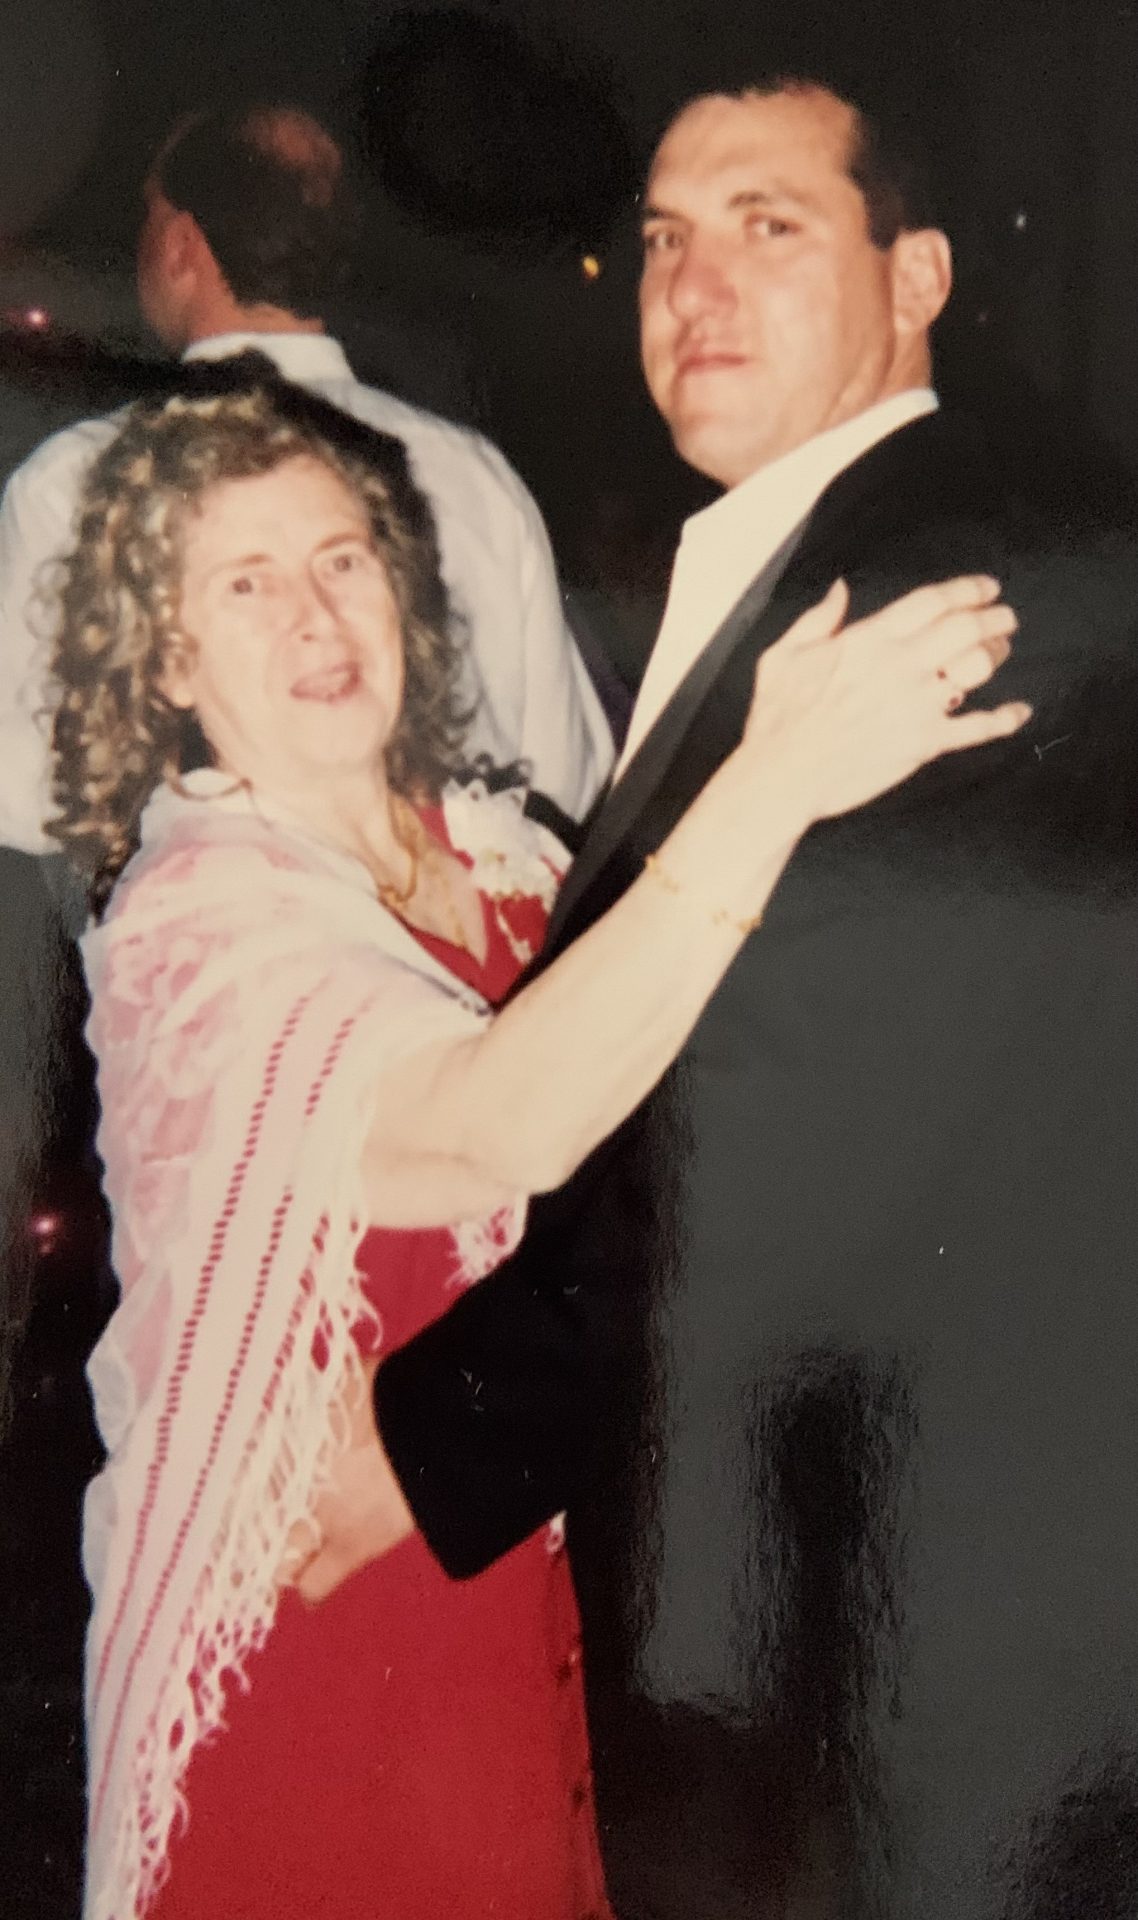 My mom and I at my wedding